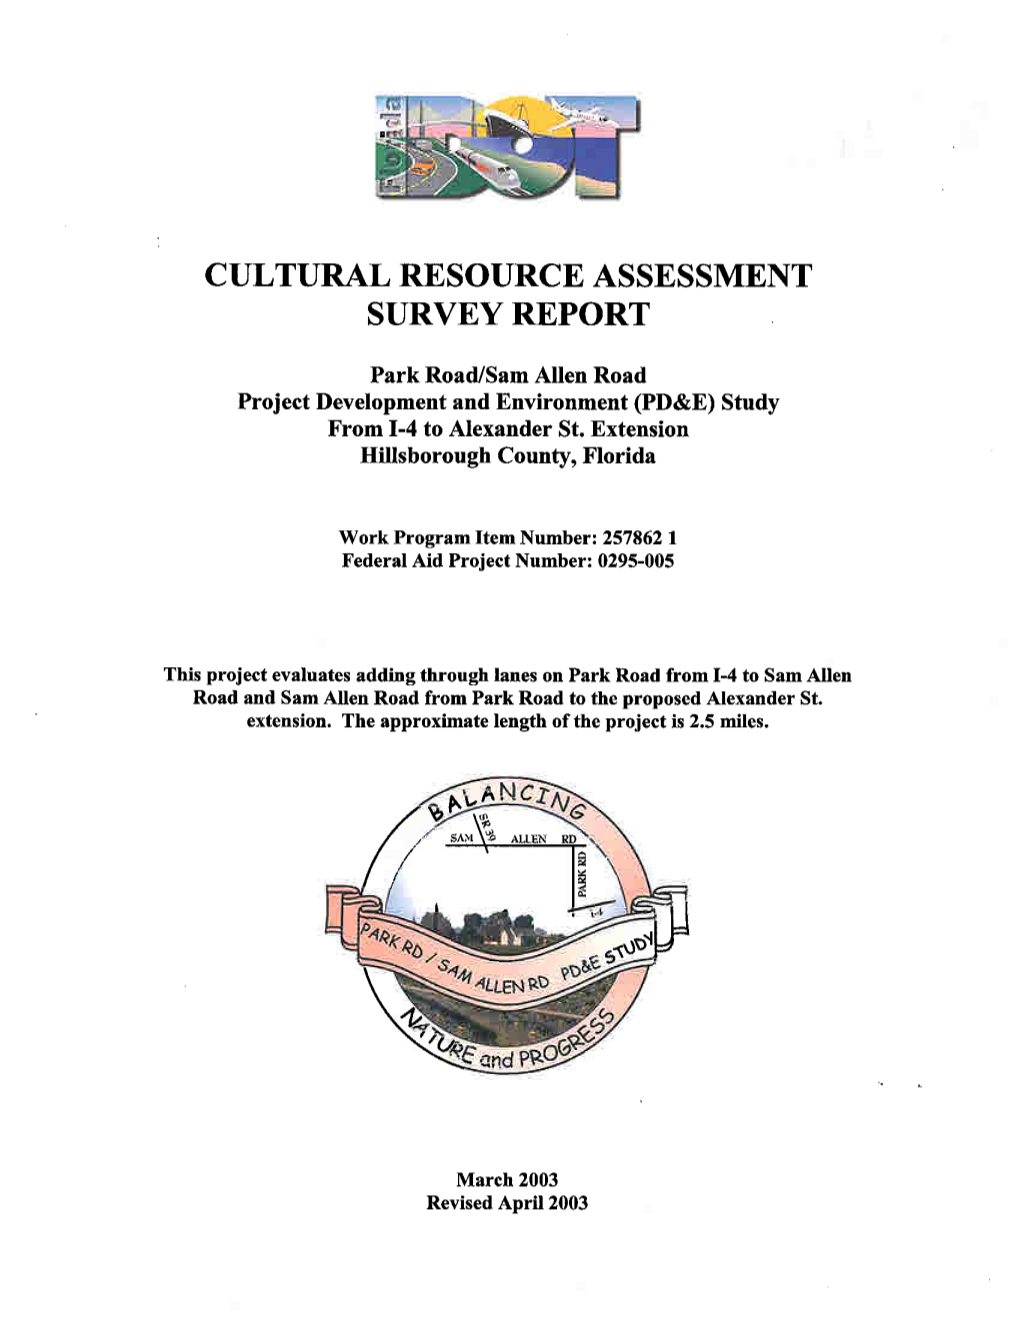 Cultural Resource Assessment Survey Report for the SR 39 PD&E Study Project (Almy Et Al